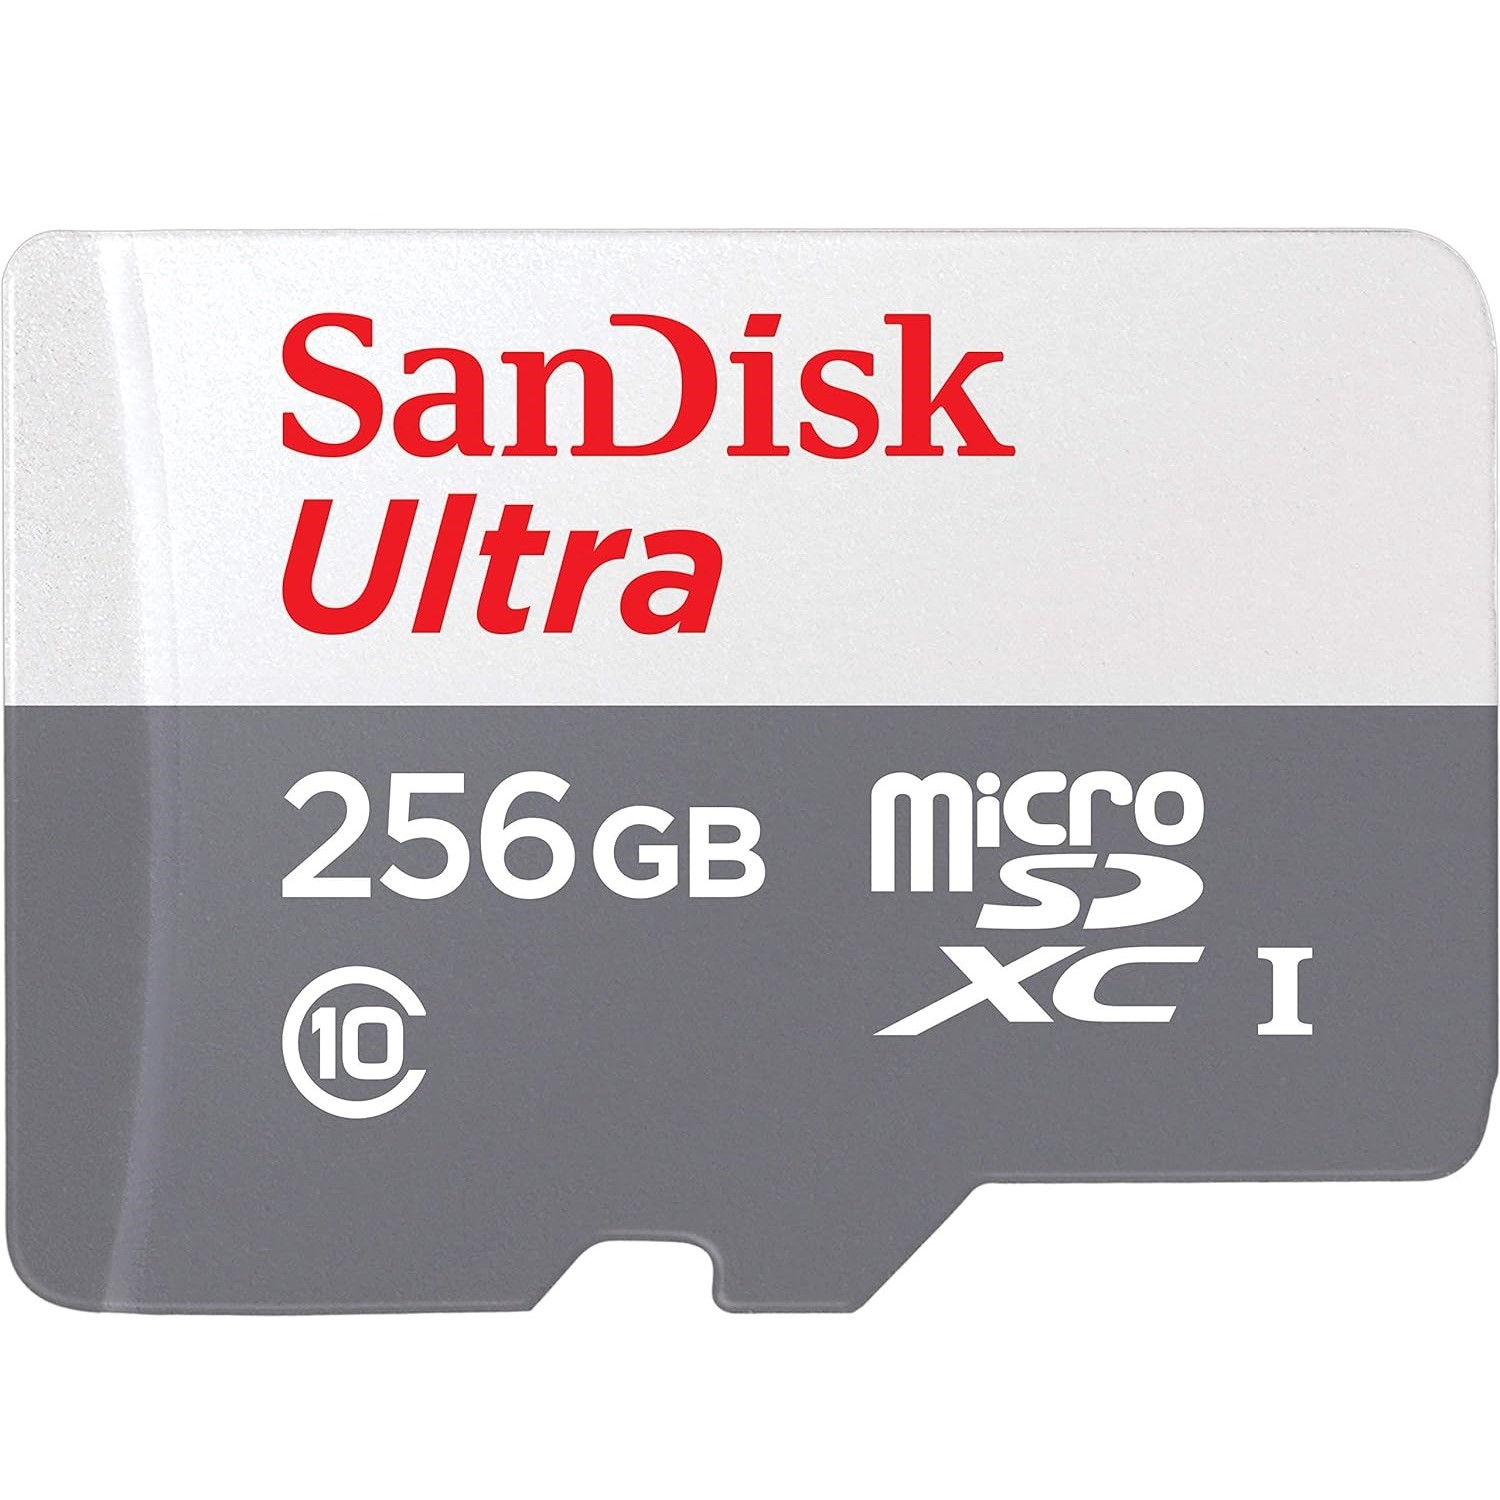 SanDisk Made for Amazon 256GB microSD メモリカード